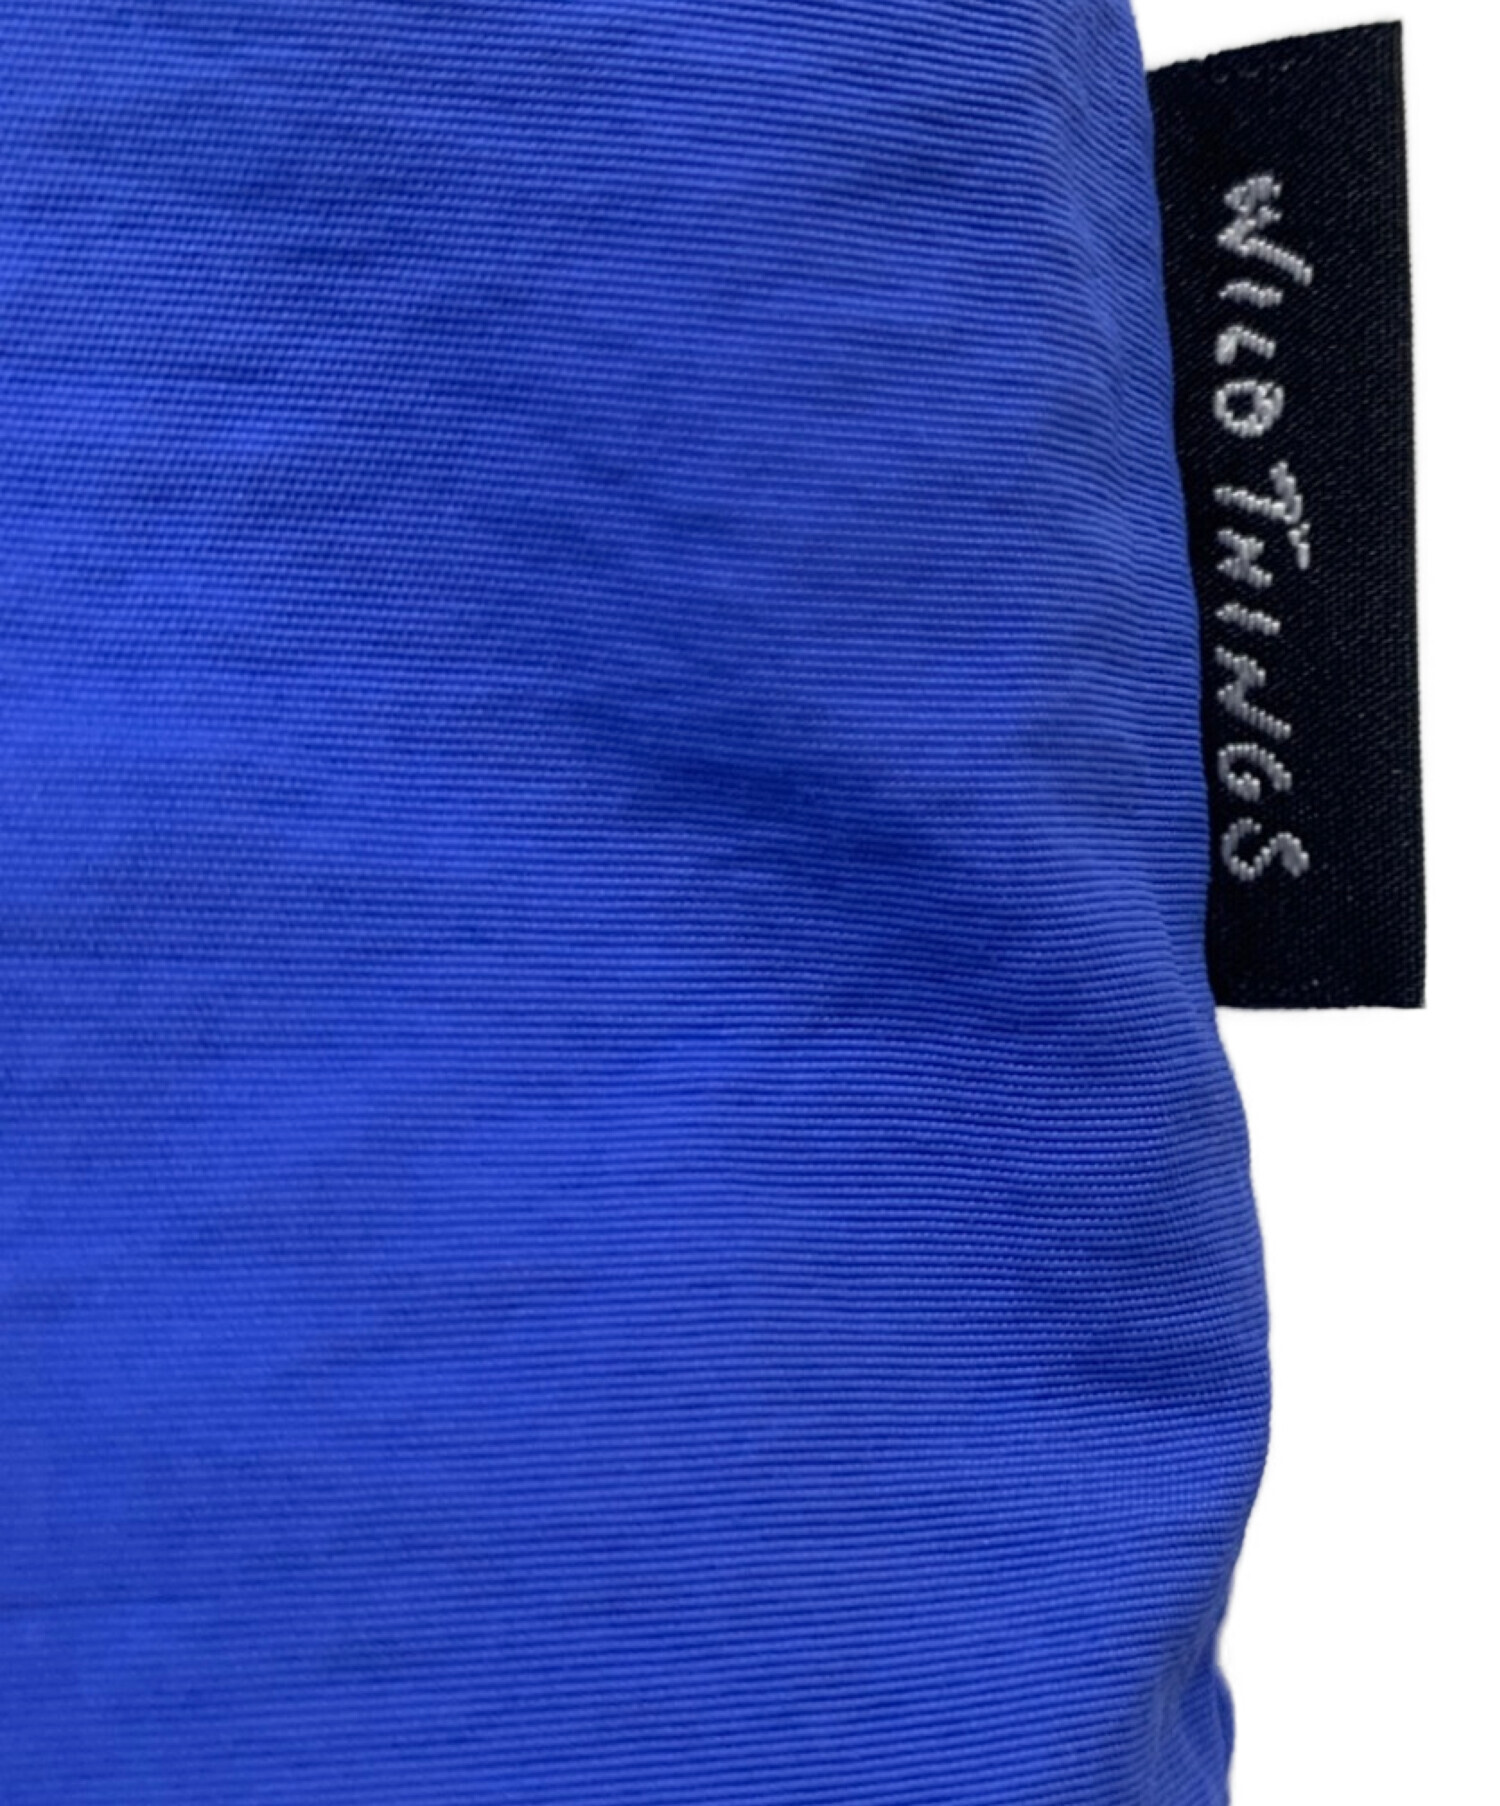 WILD THINGS (ワイルドシングス) キャンプシャツ ブルー サイズ:L